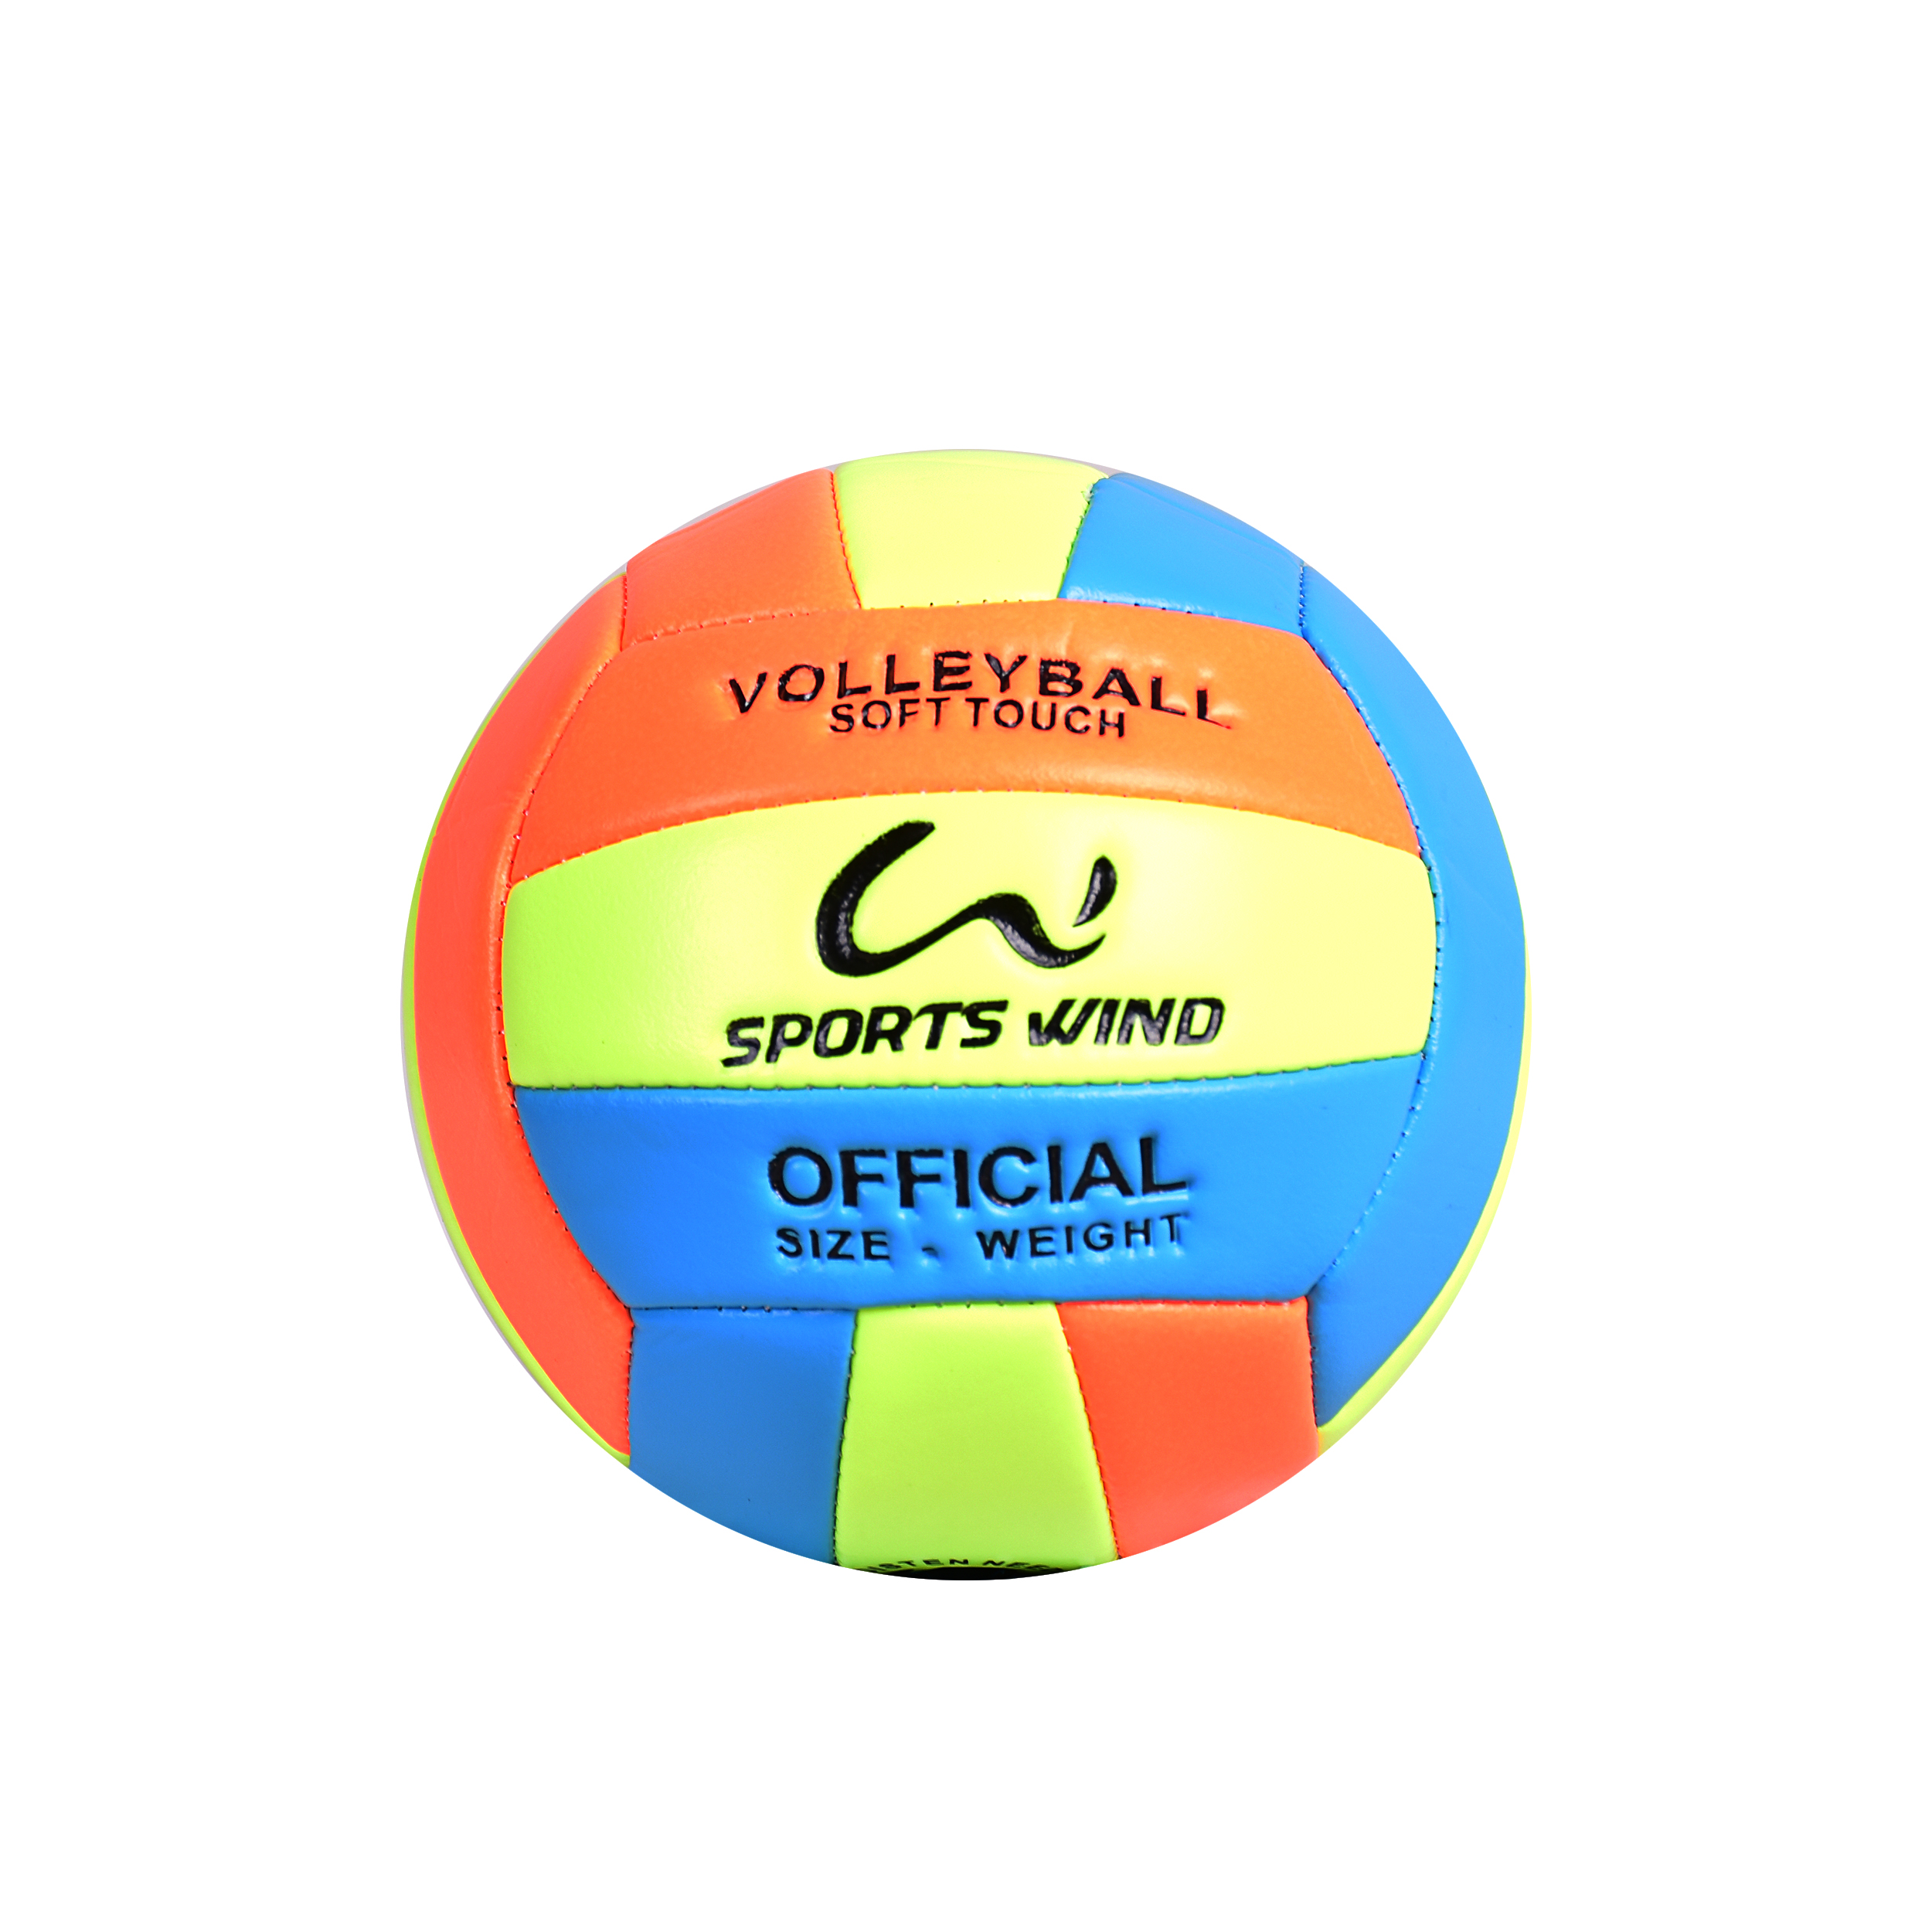 توپ والیبال مدل TVK001-W